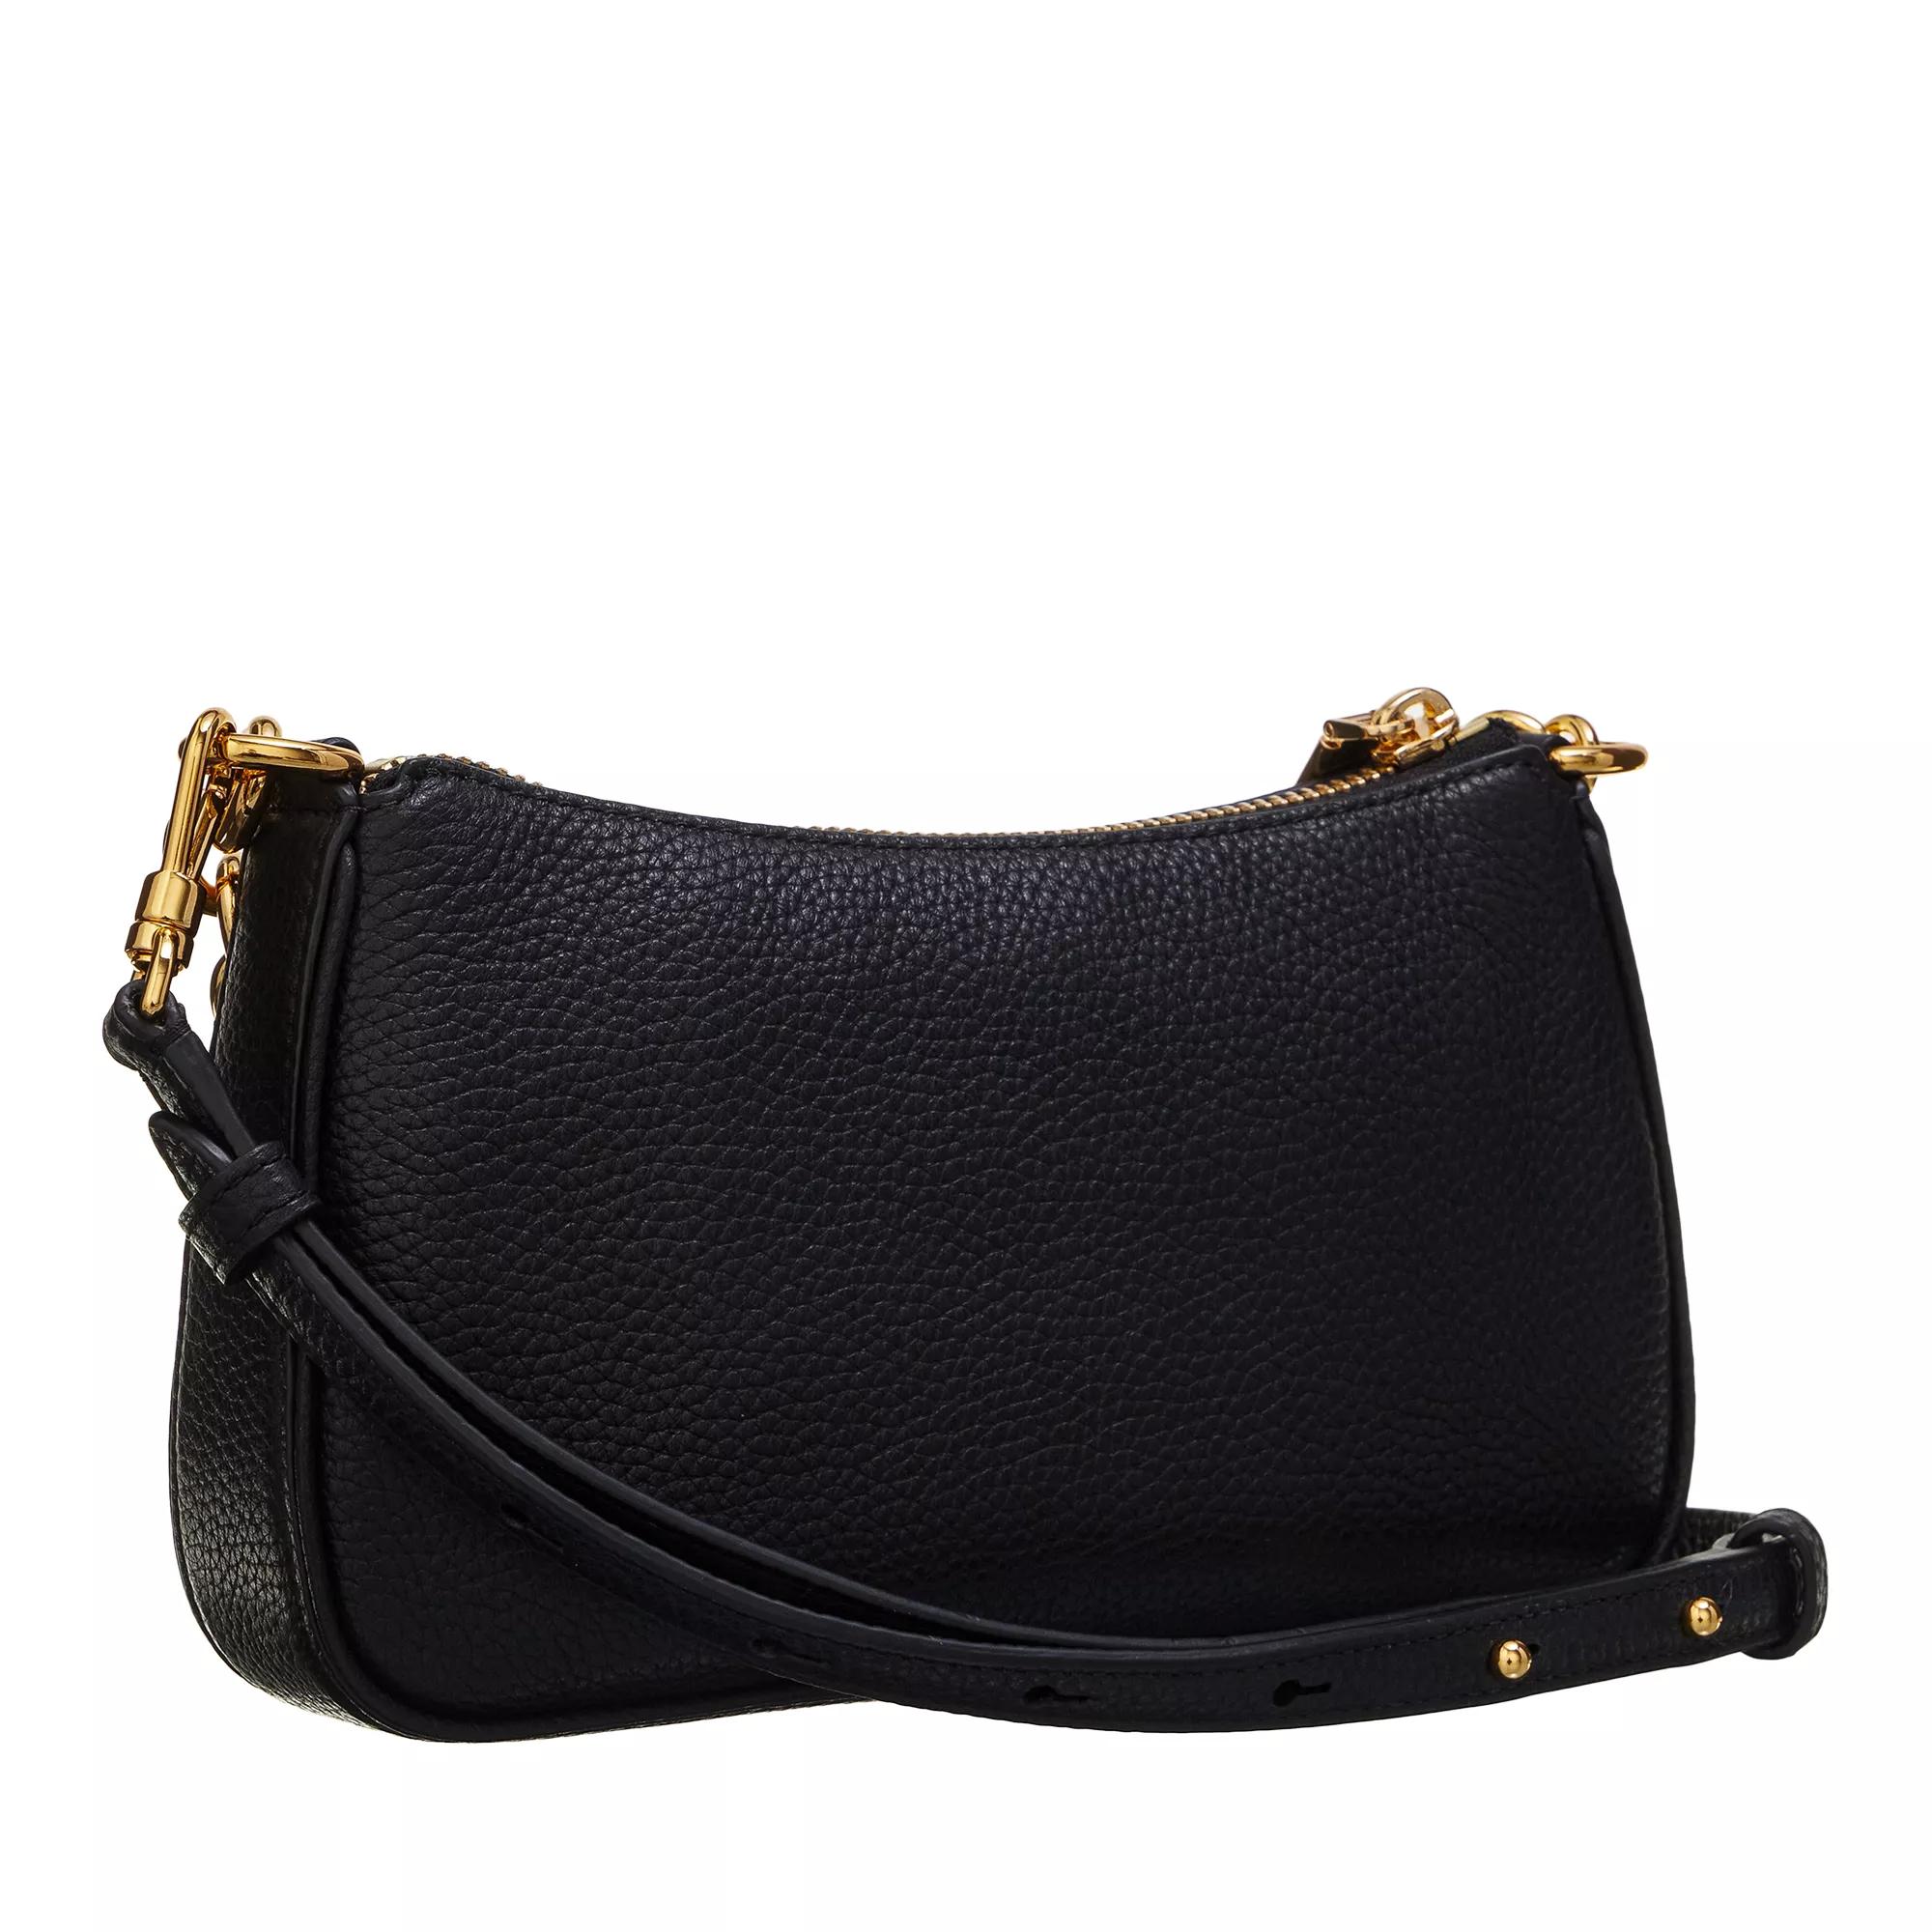 Kate spade new york Crossbody bags Jolie Pebbled Leather Small Convertible Crossbody in zwart